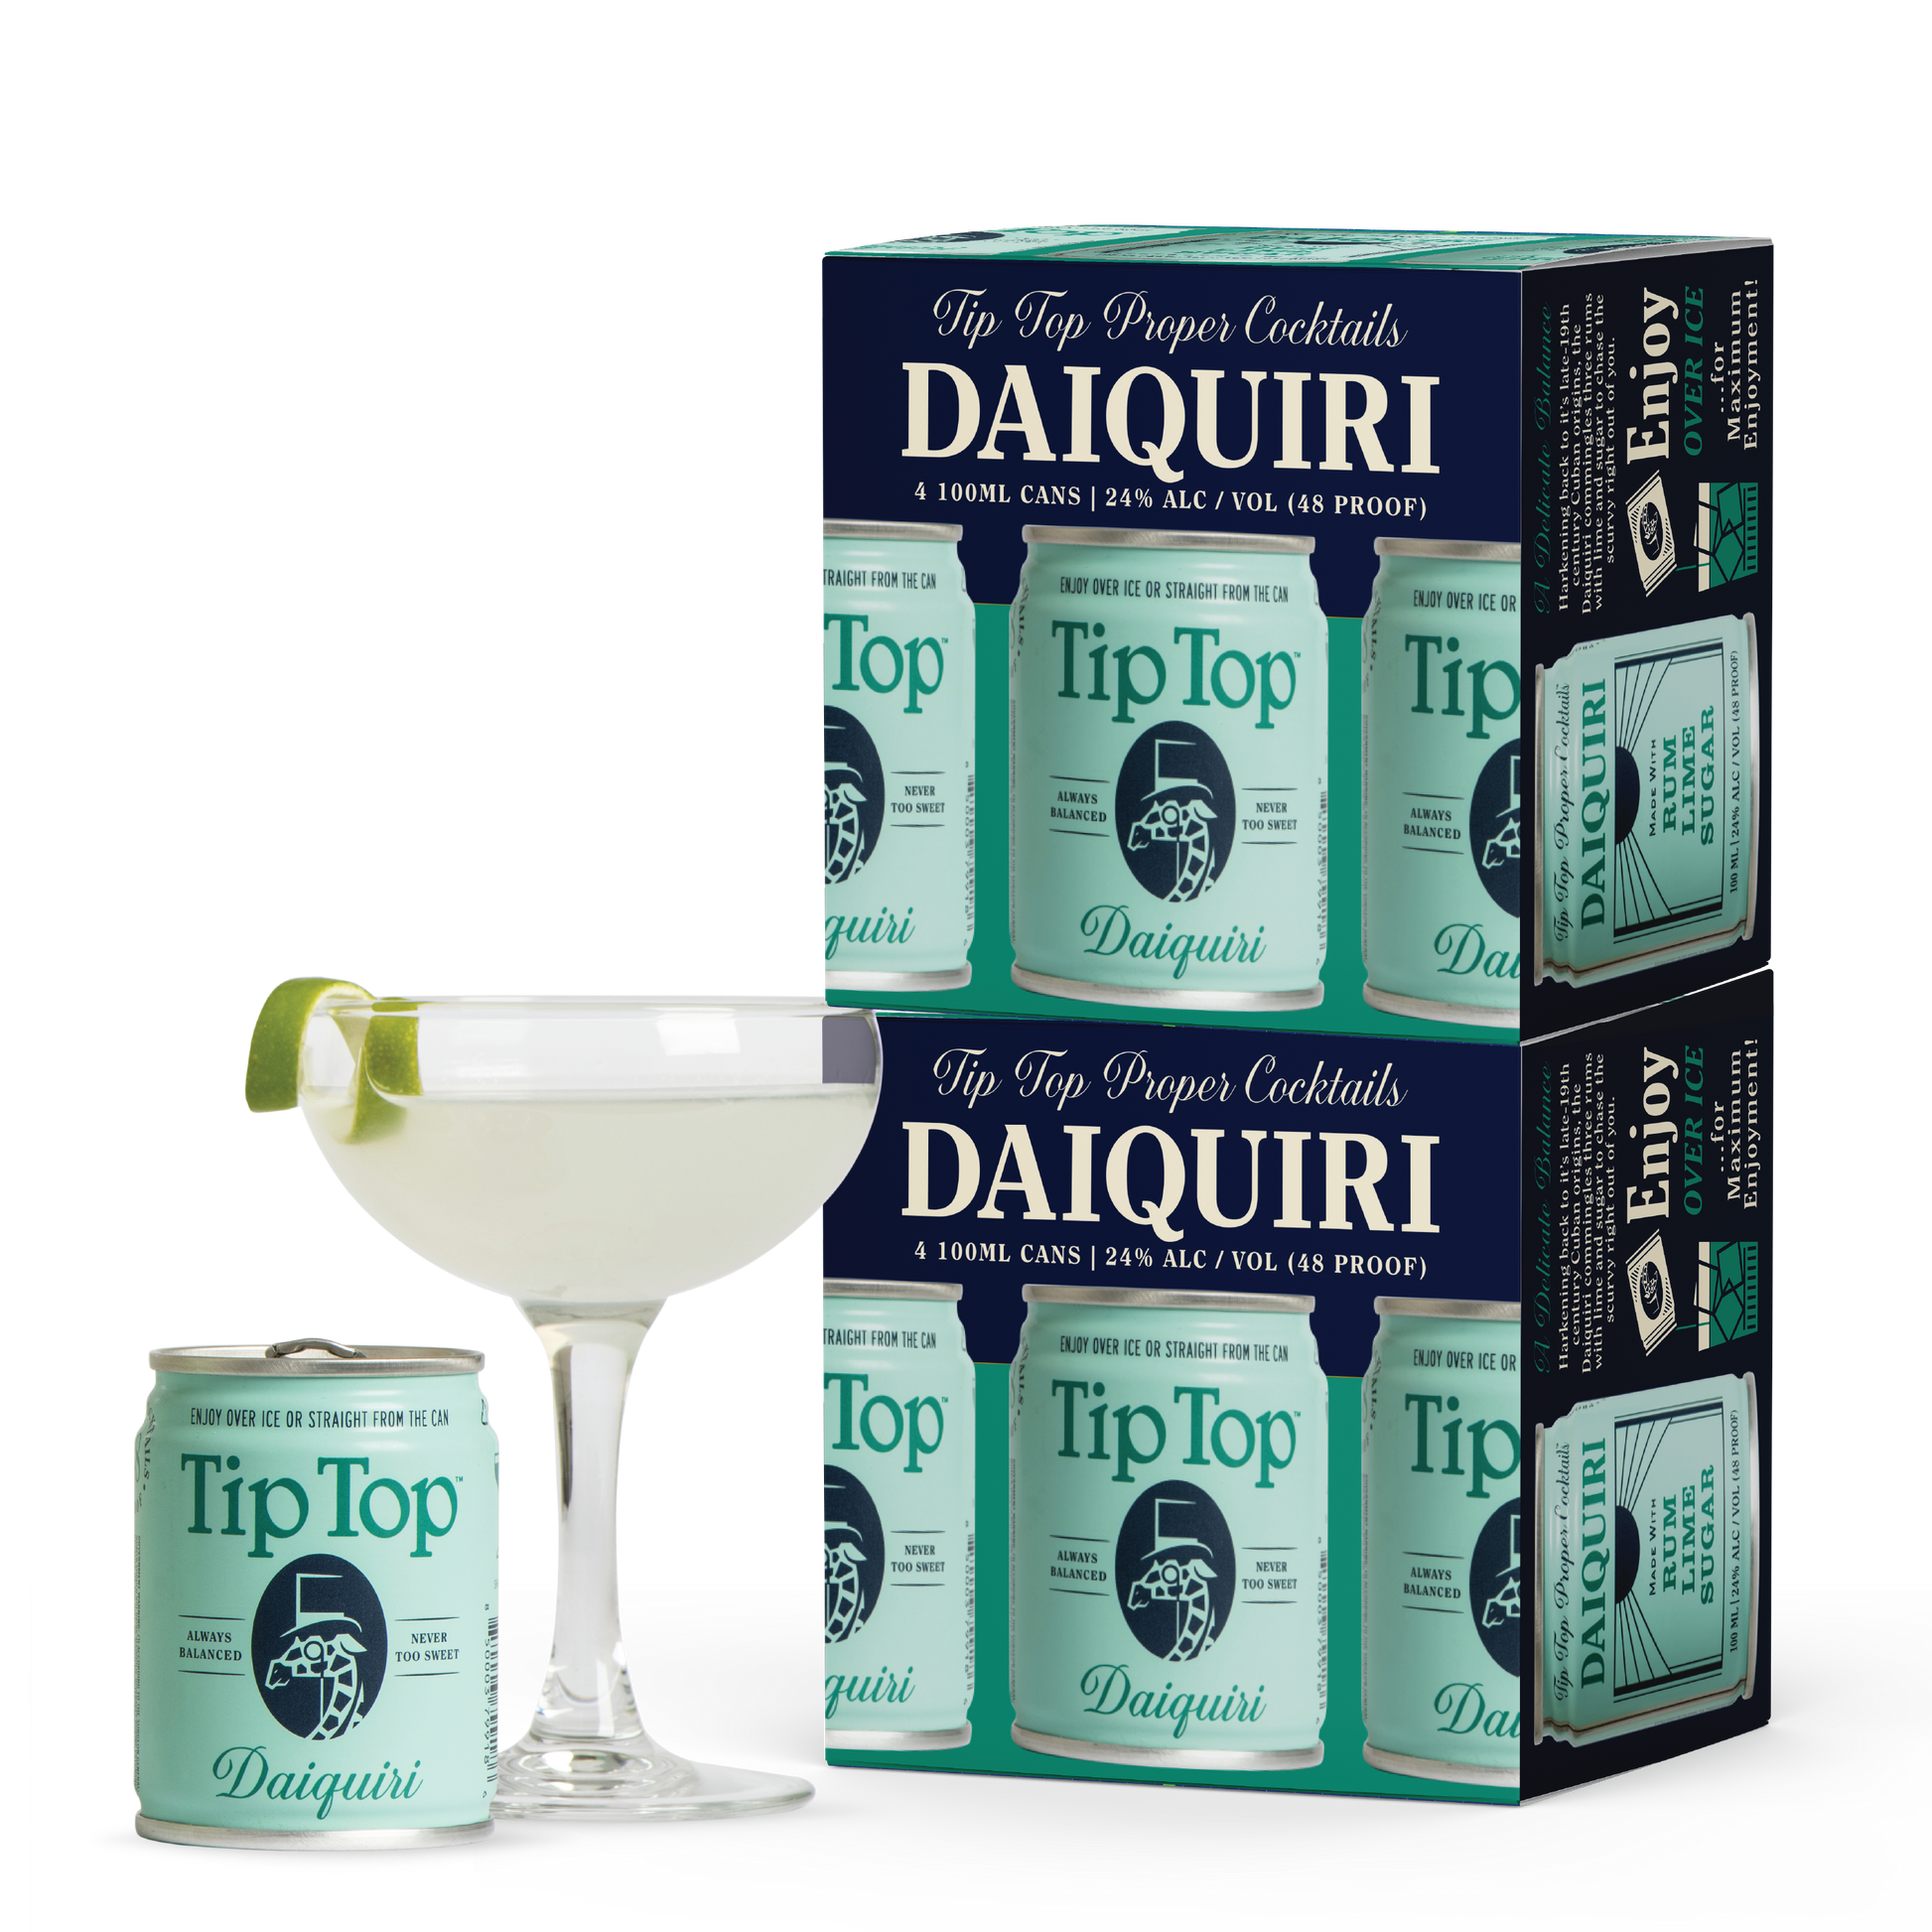 Tip Top Proper Cocktails Daiquiri